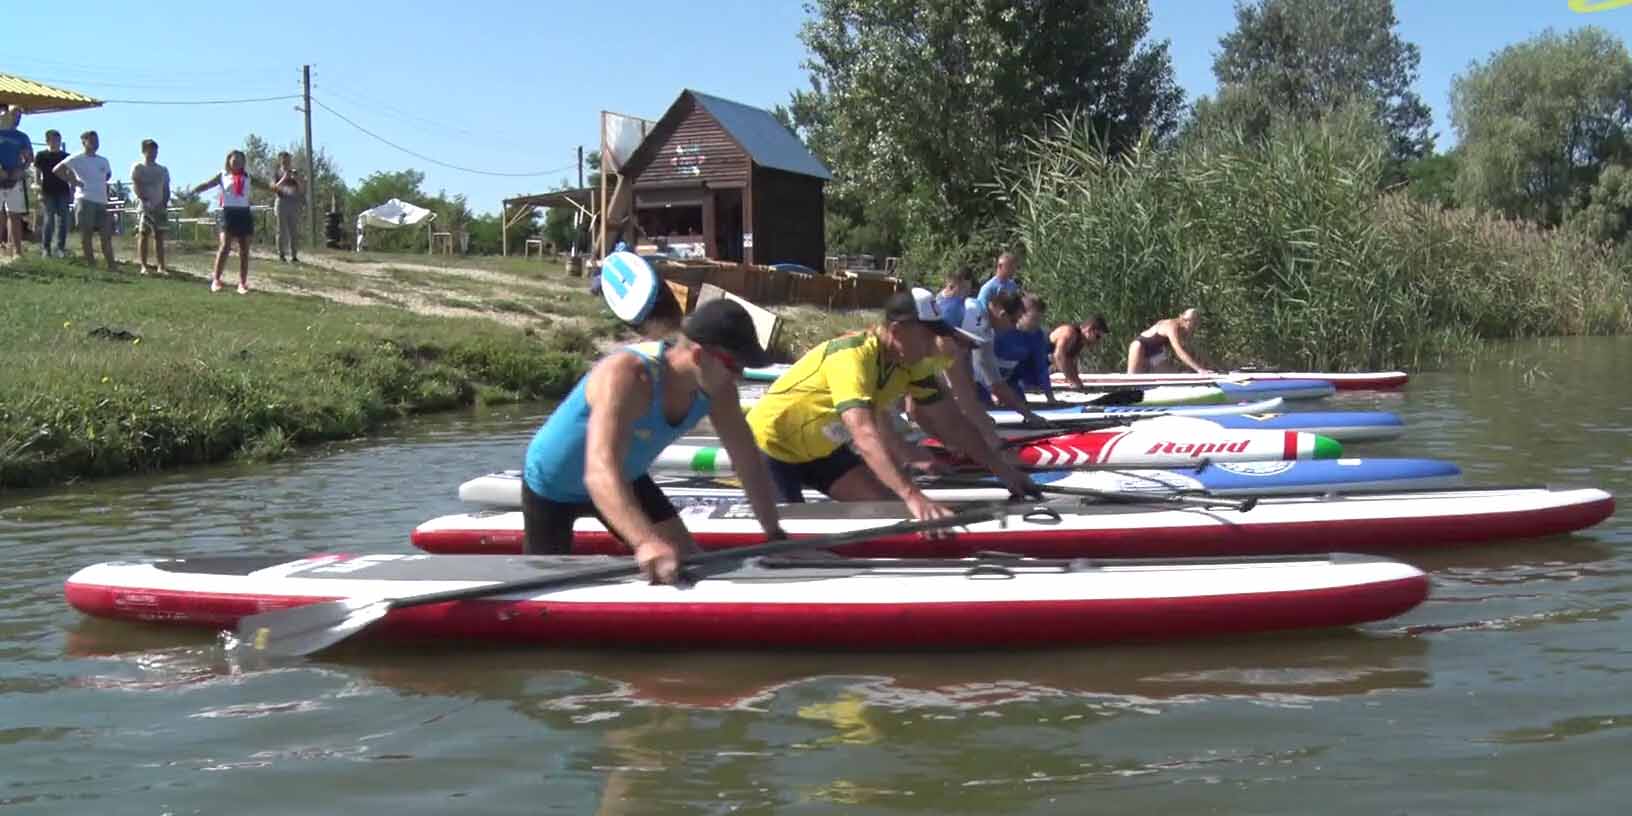 Гонки на байдарках, каное, кануполо, SUP бординг на фестивале Kharkiv Water Fest.